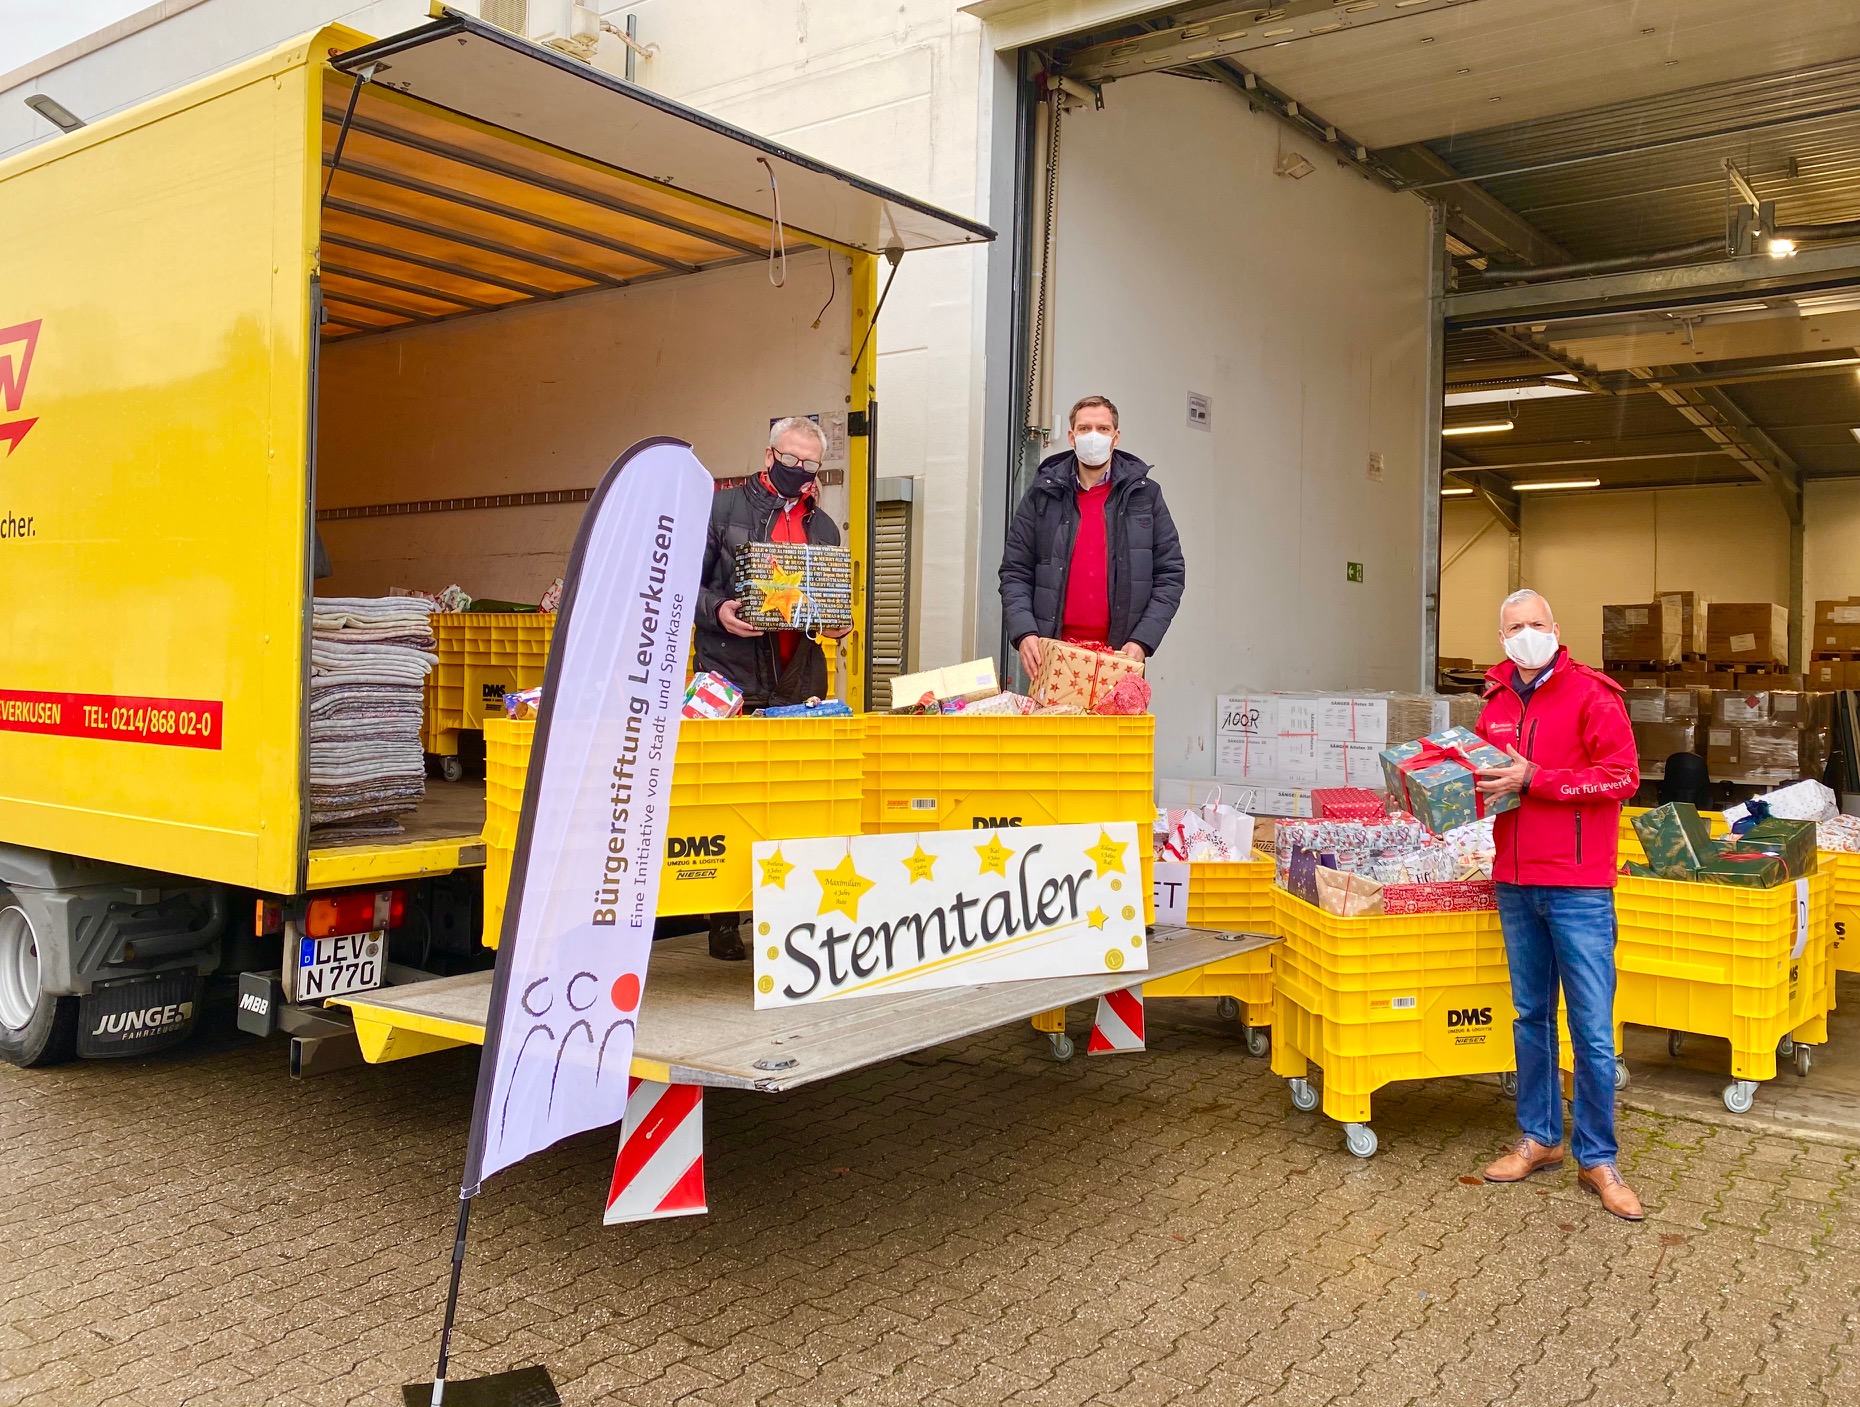 Sterntaler donation in Leverkusen